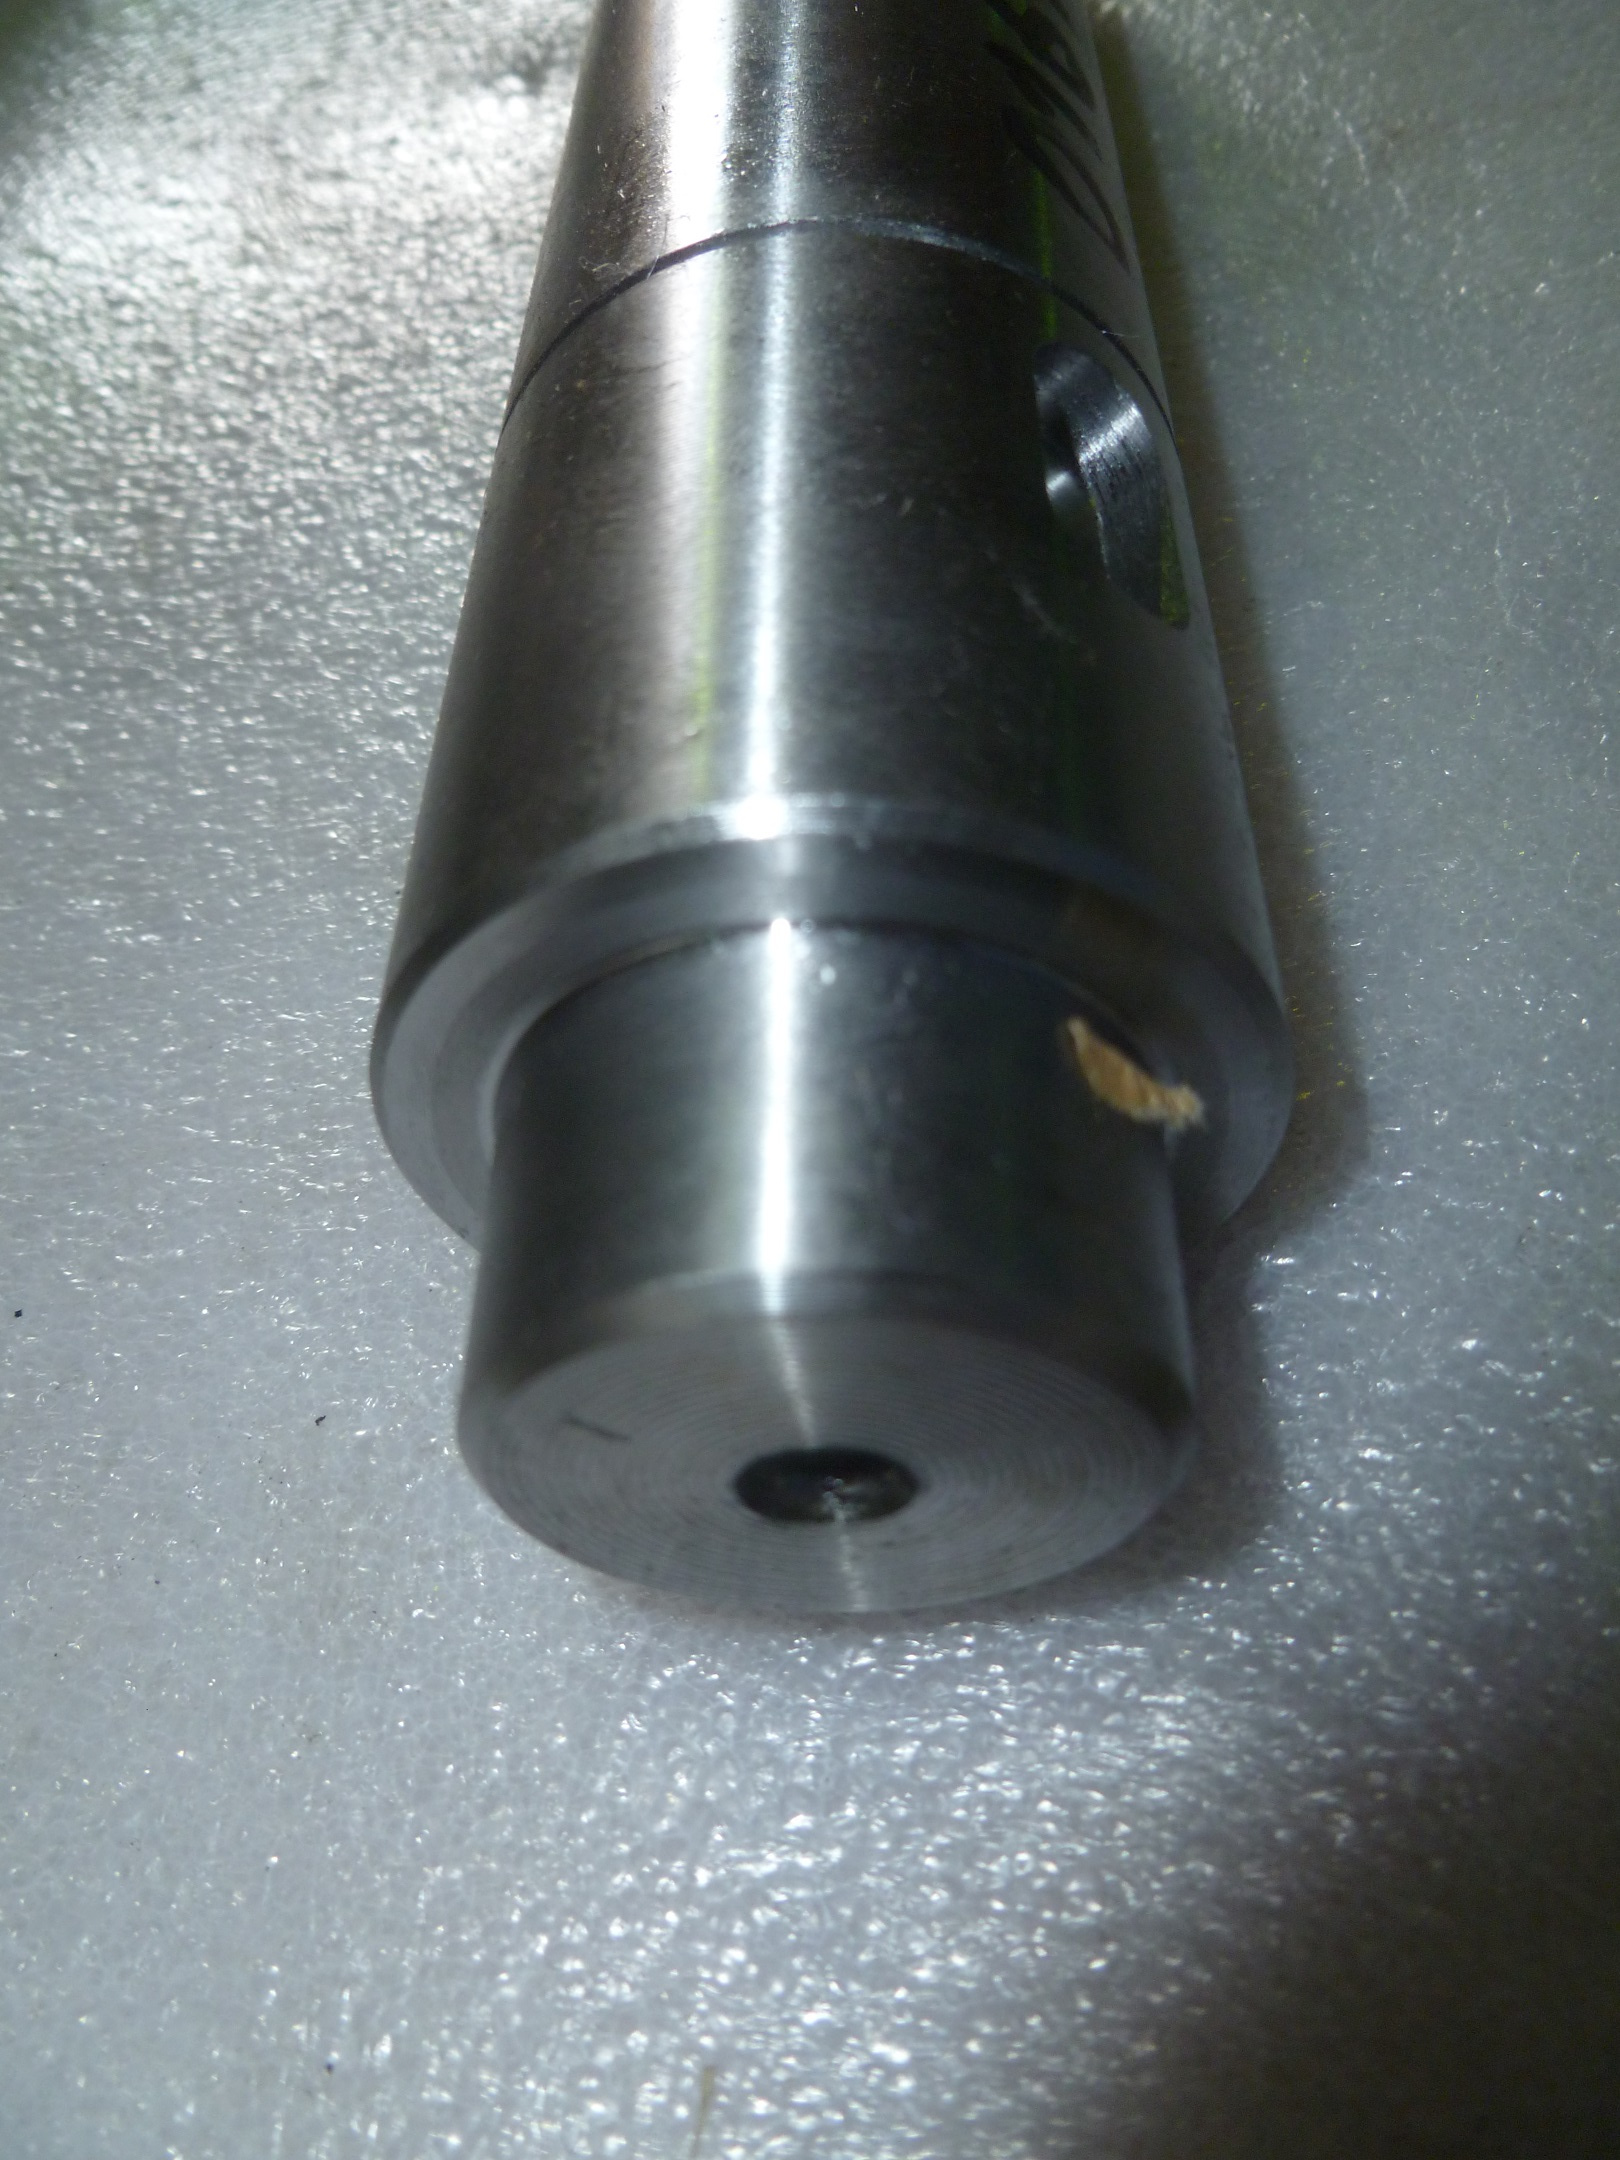 Вал ведомый TSS-WP160-170/Ecc.rotary shaft, driven ,№29 (CNP300024-29)